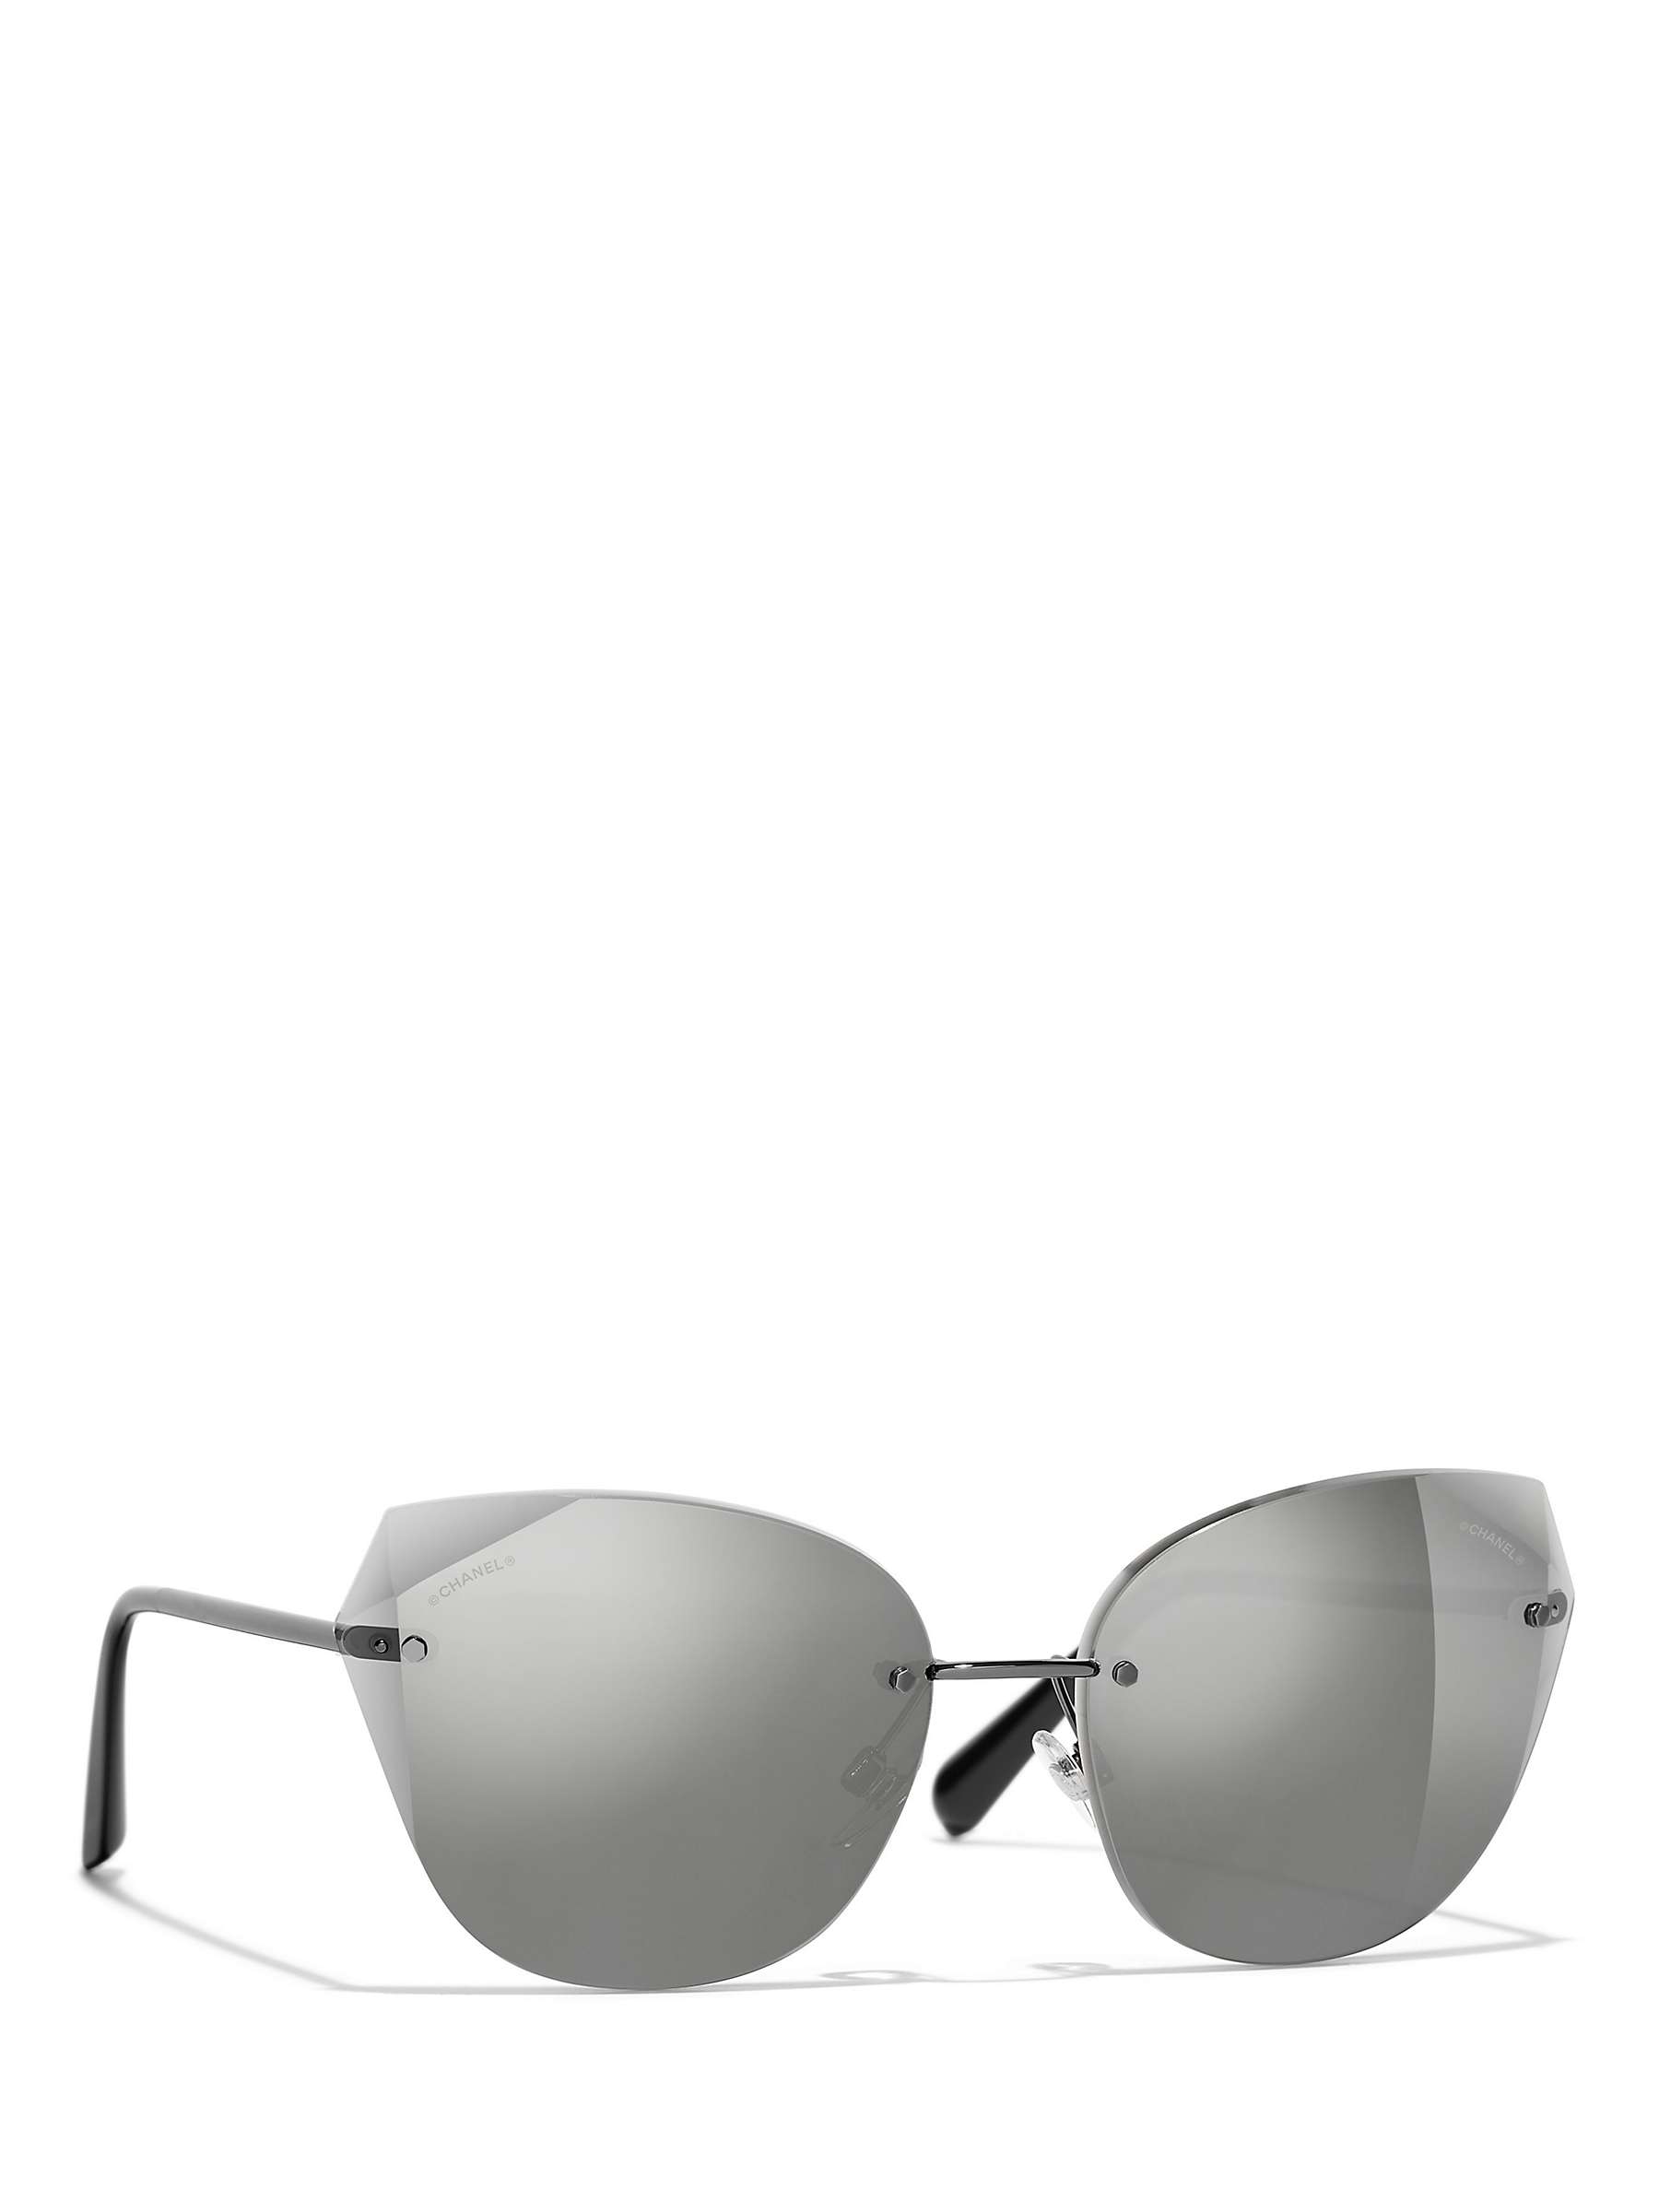 Buy CHANEL Cat Eye Sunglasses CH4237 Grey/Mirror Silver Online at johnlewis.com